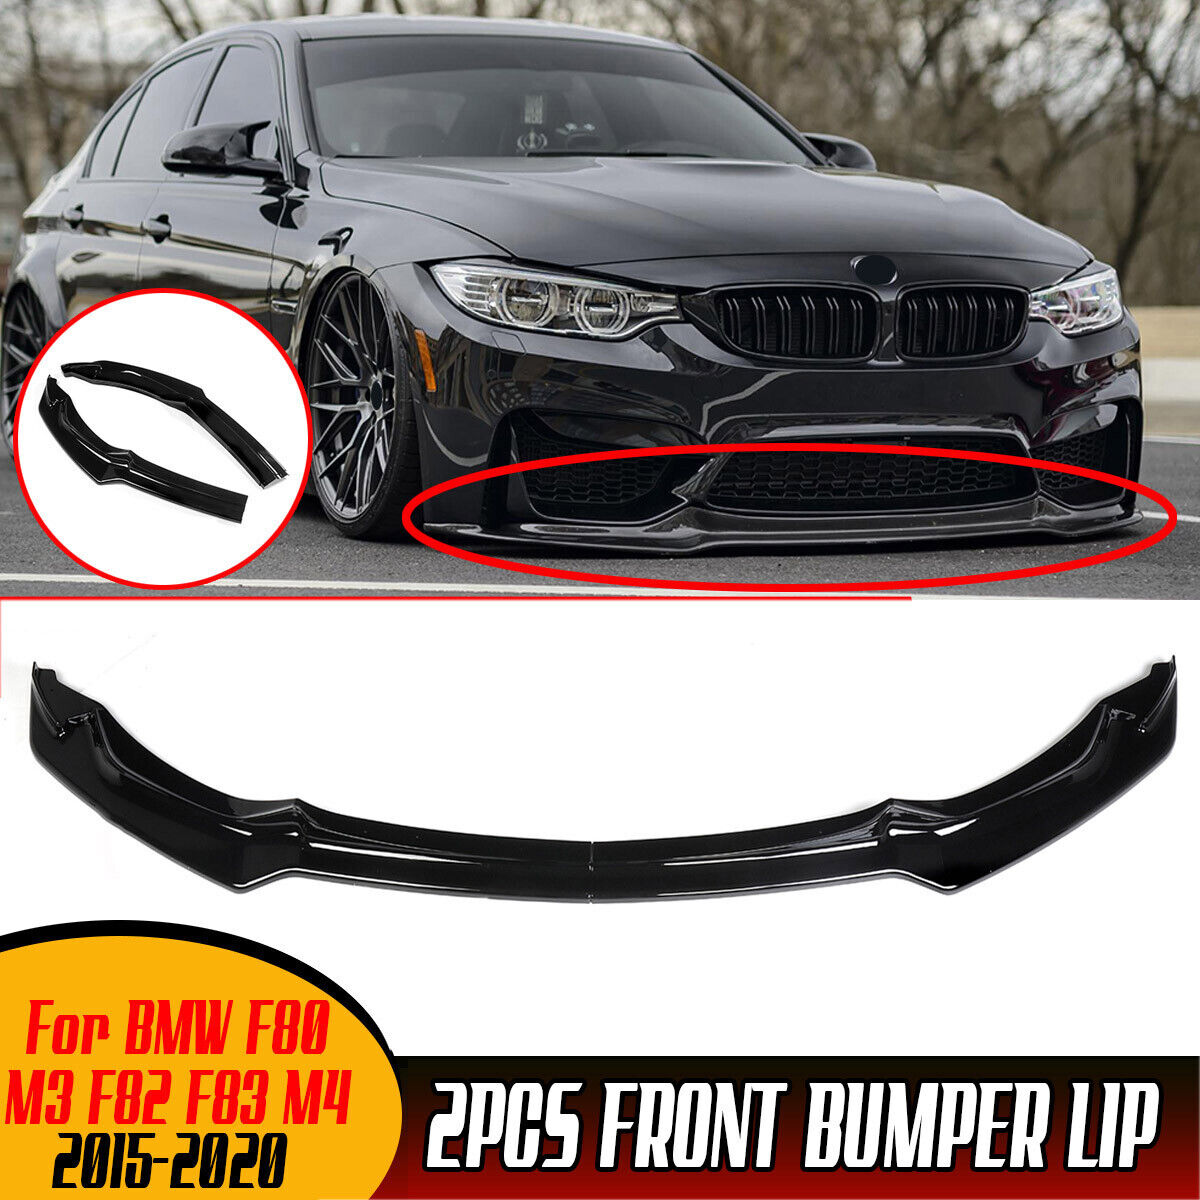 Gloss Black Front Bumper Lip Splitter CS Style For 2015-20 BMW F80 M3 F82 F83 M4